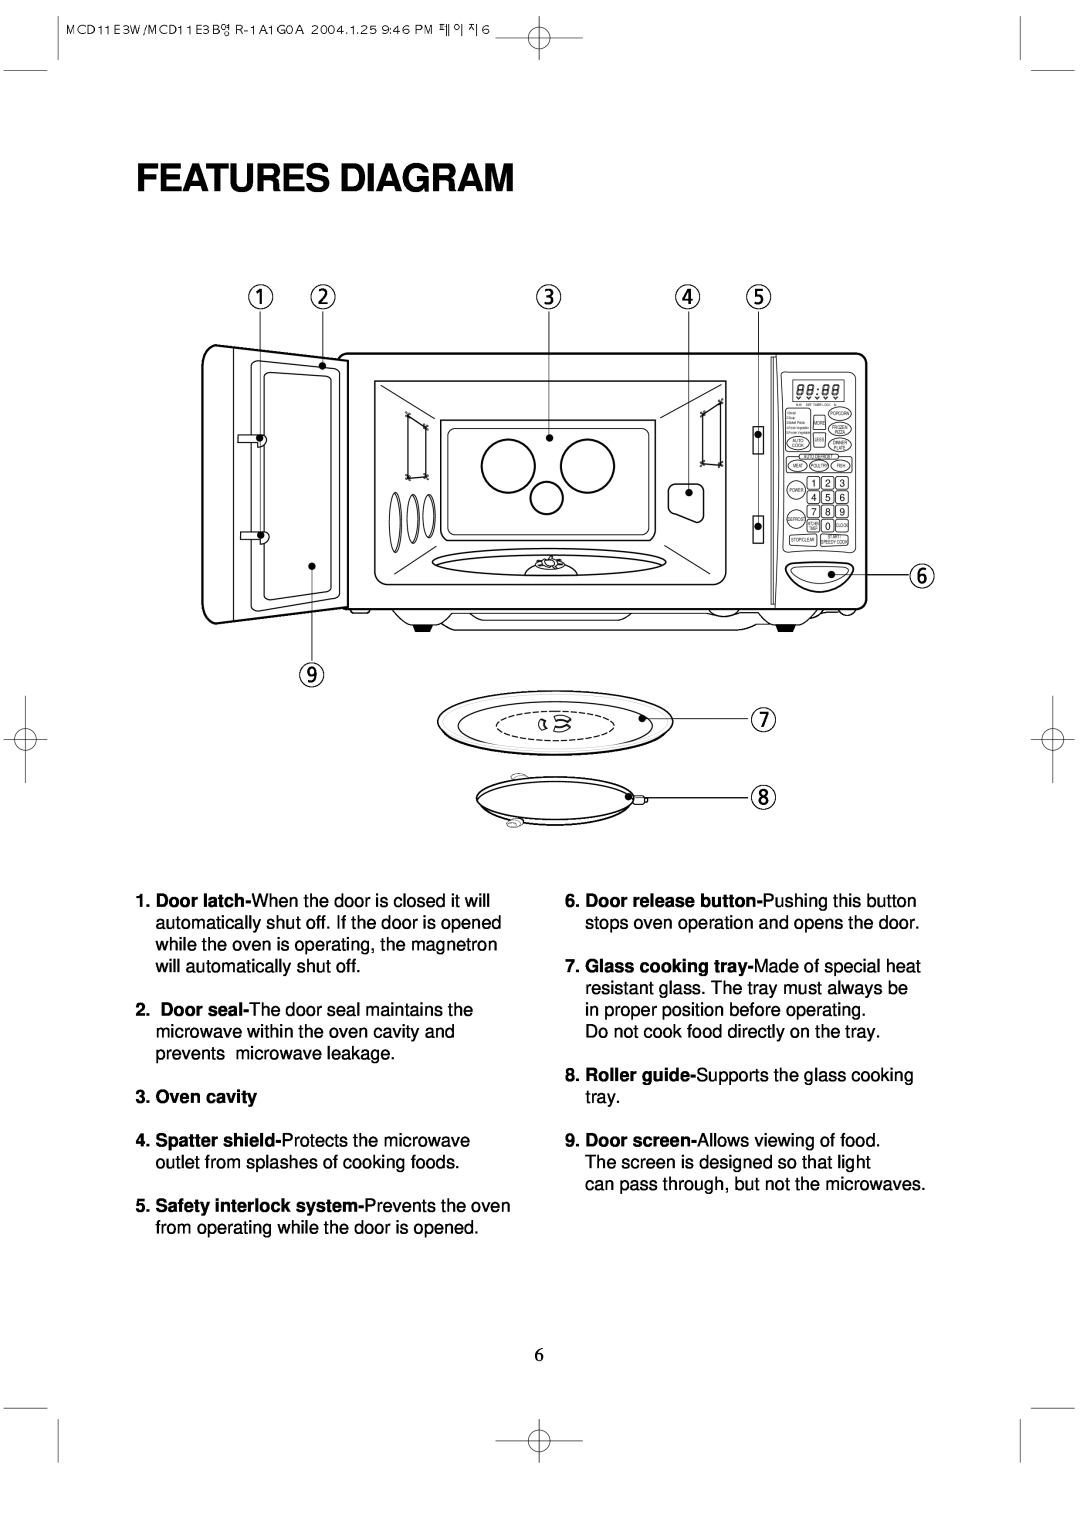 Magic Chef MCD11E3B instruction manual Features Diagram, Oven cavity 